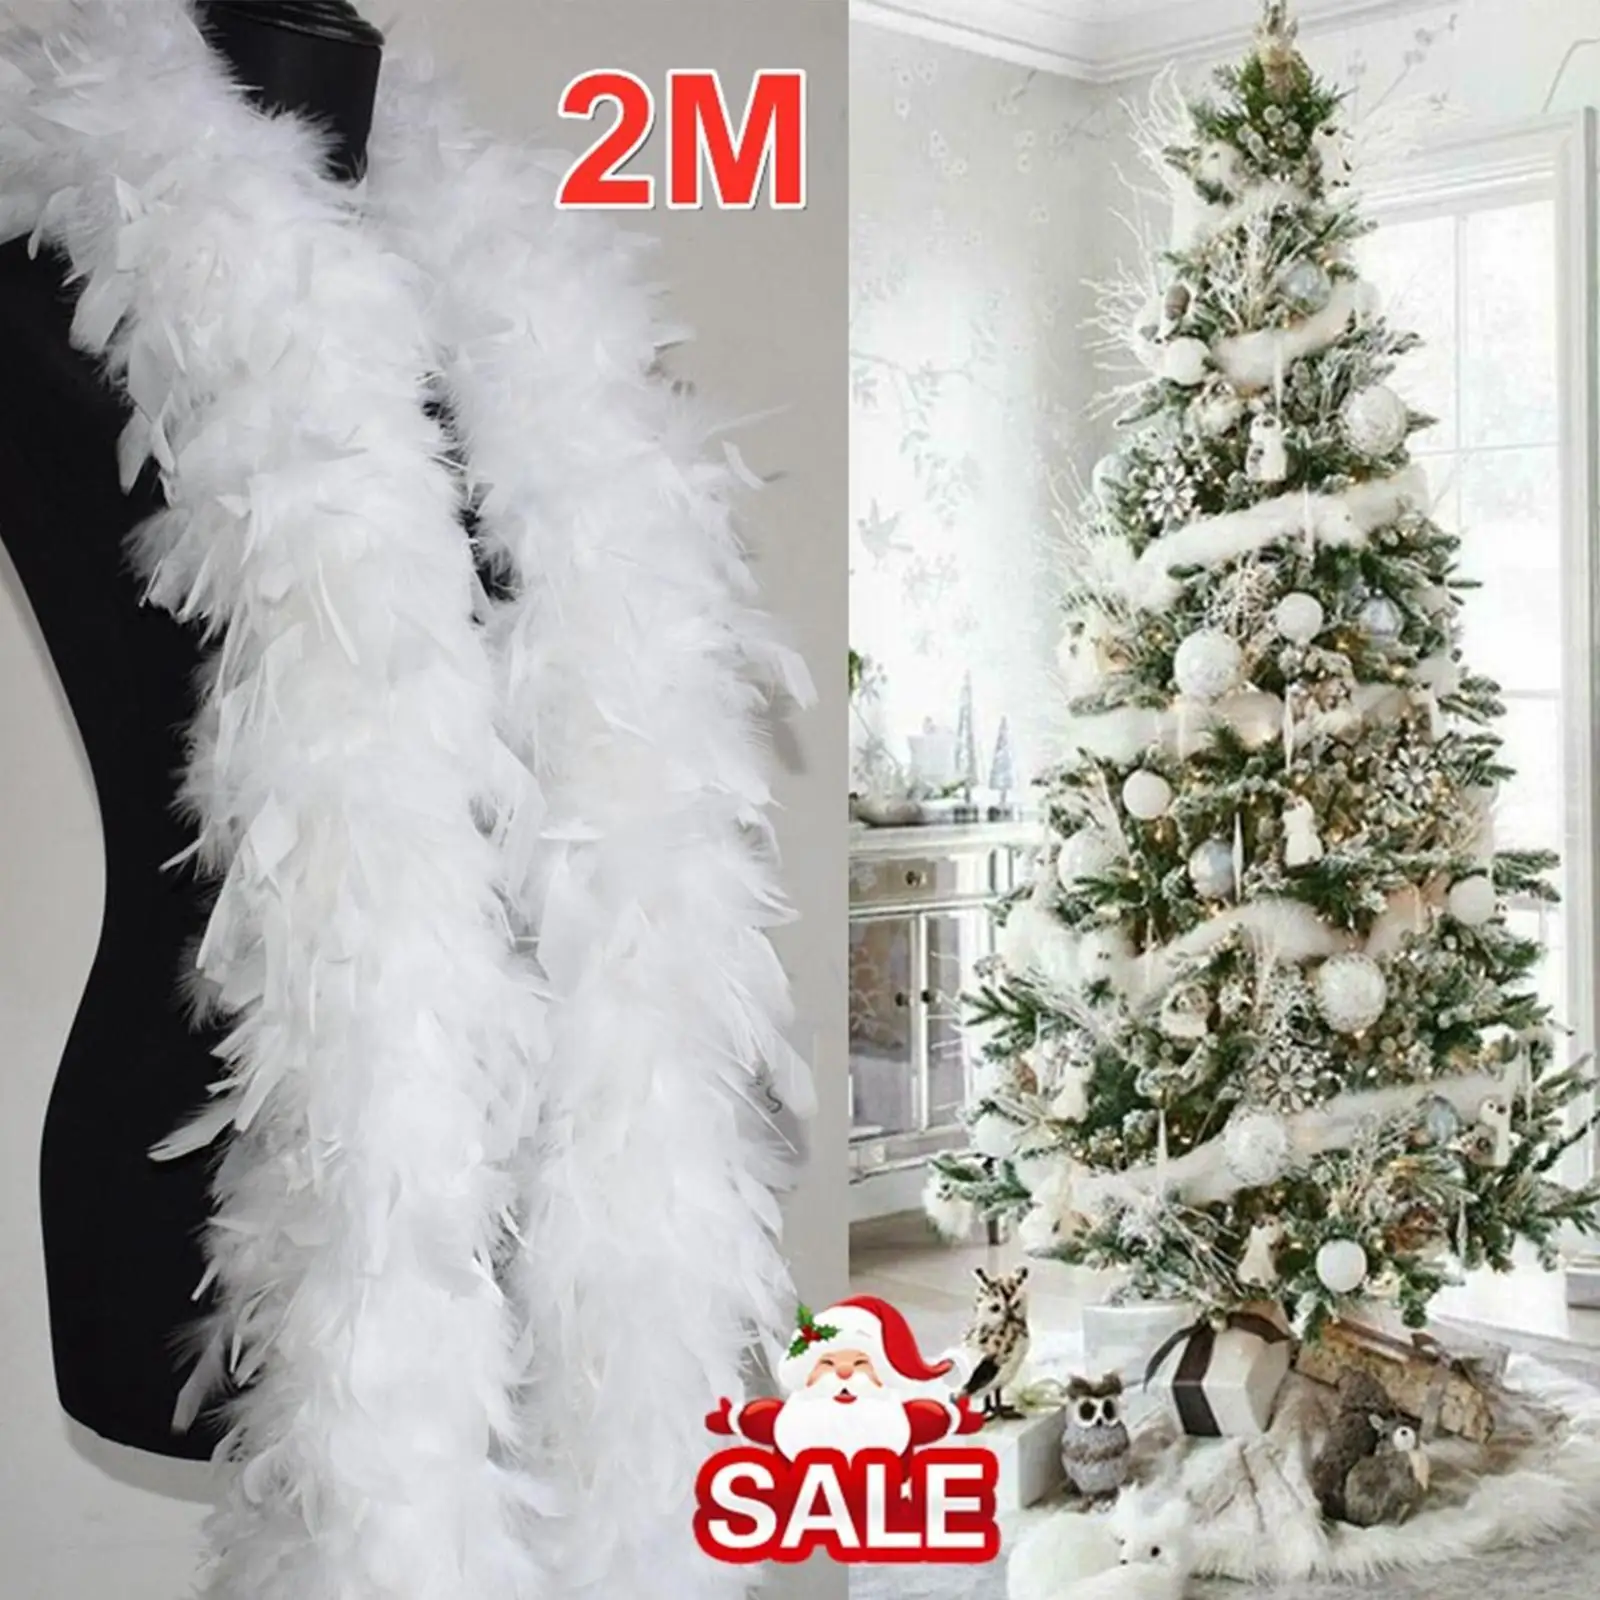 2m Feather Boa Christmas Tree Decoration White Feather Garland Ribbon White Boa Feathers Wedding Dress Shawl Decorative Feathers